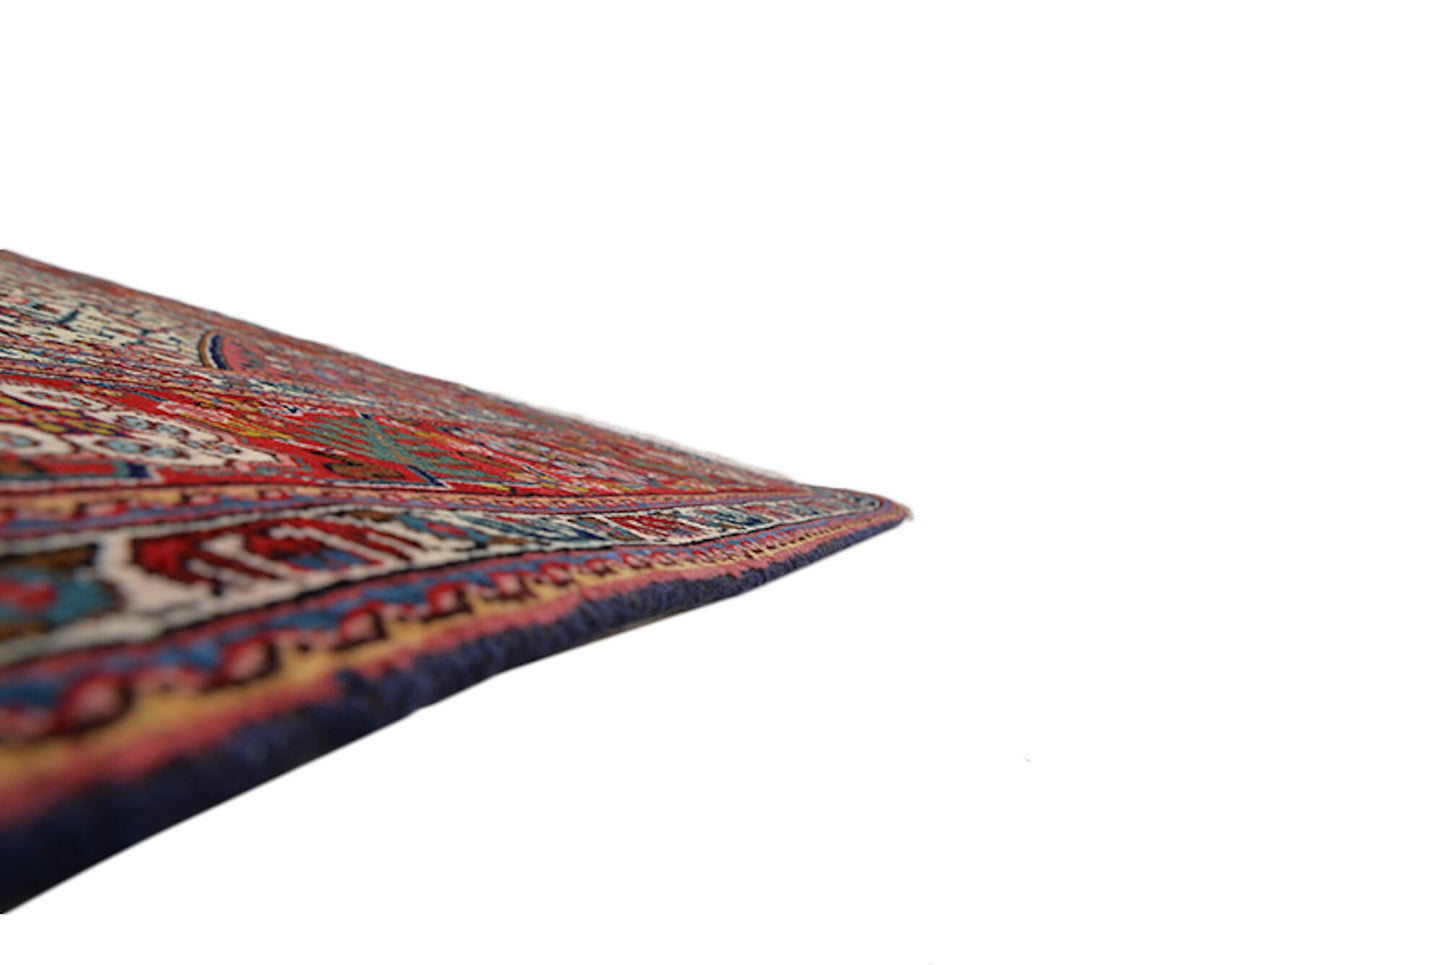 8 x 10 Red Navy Black Medallion Rug | Handmade Area Rug | Oriental Persian Rug | Living Room Rug | Wool Traditional Vintage | Large Oriental